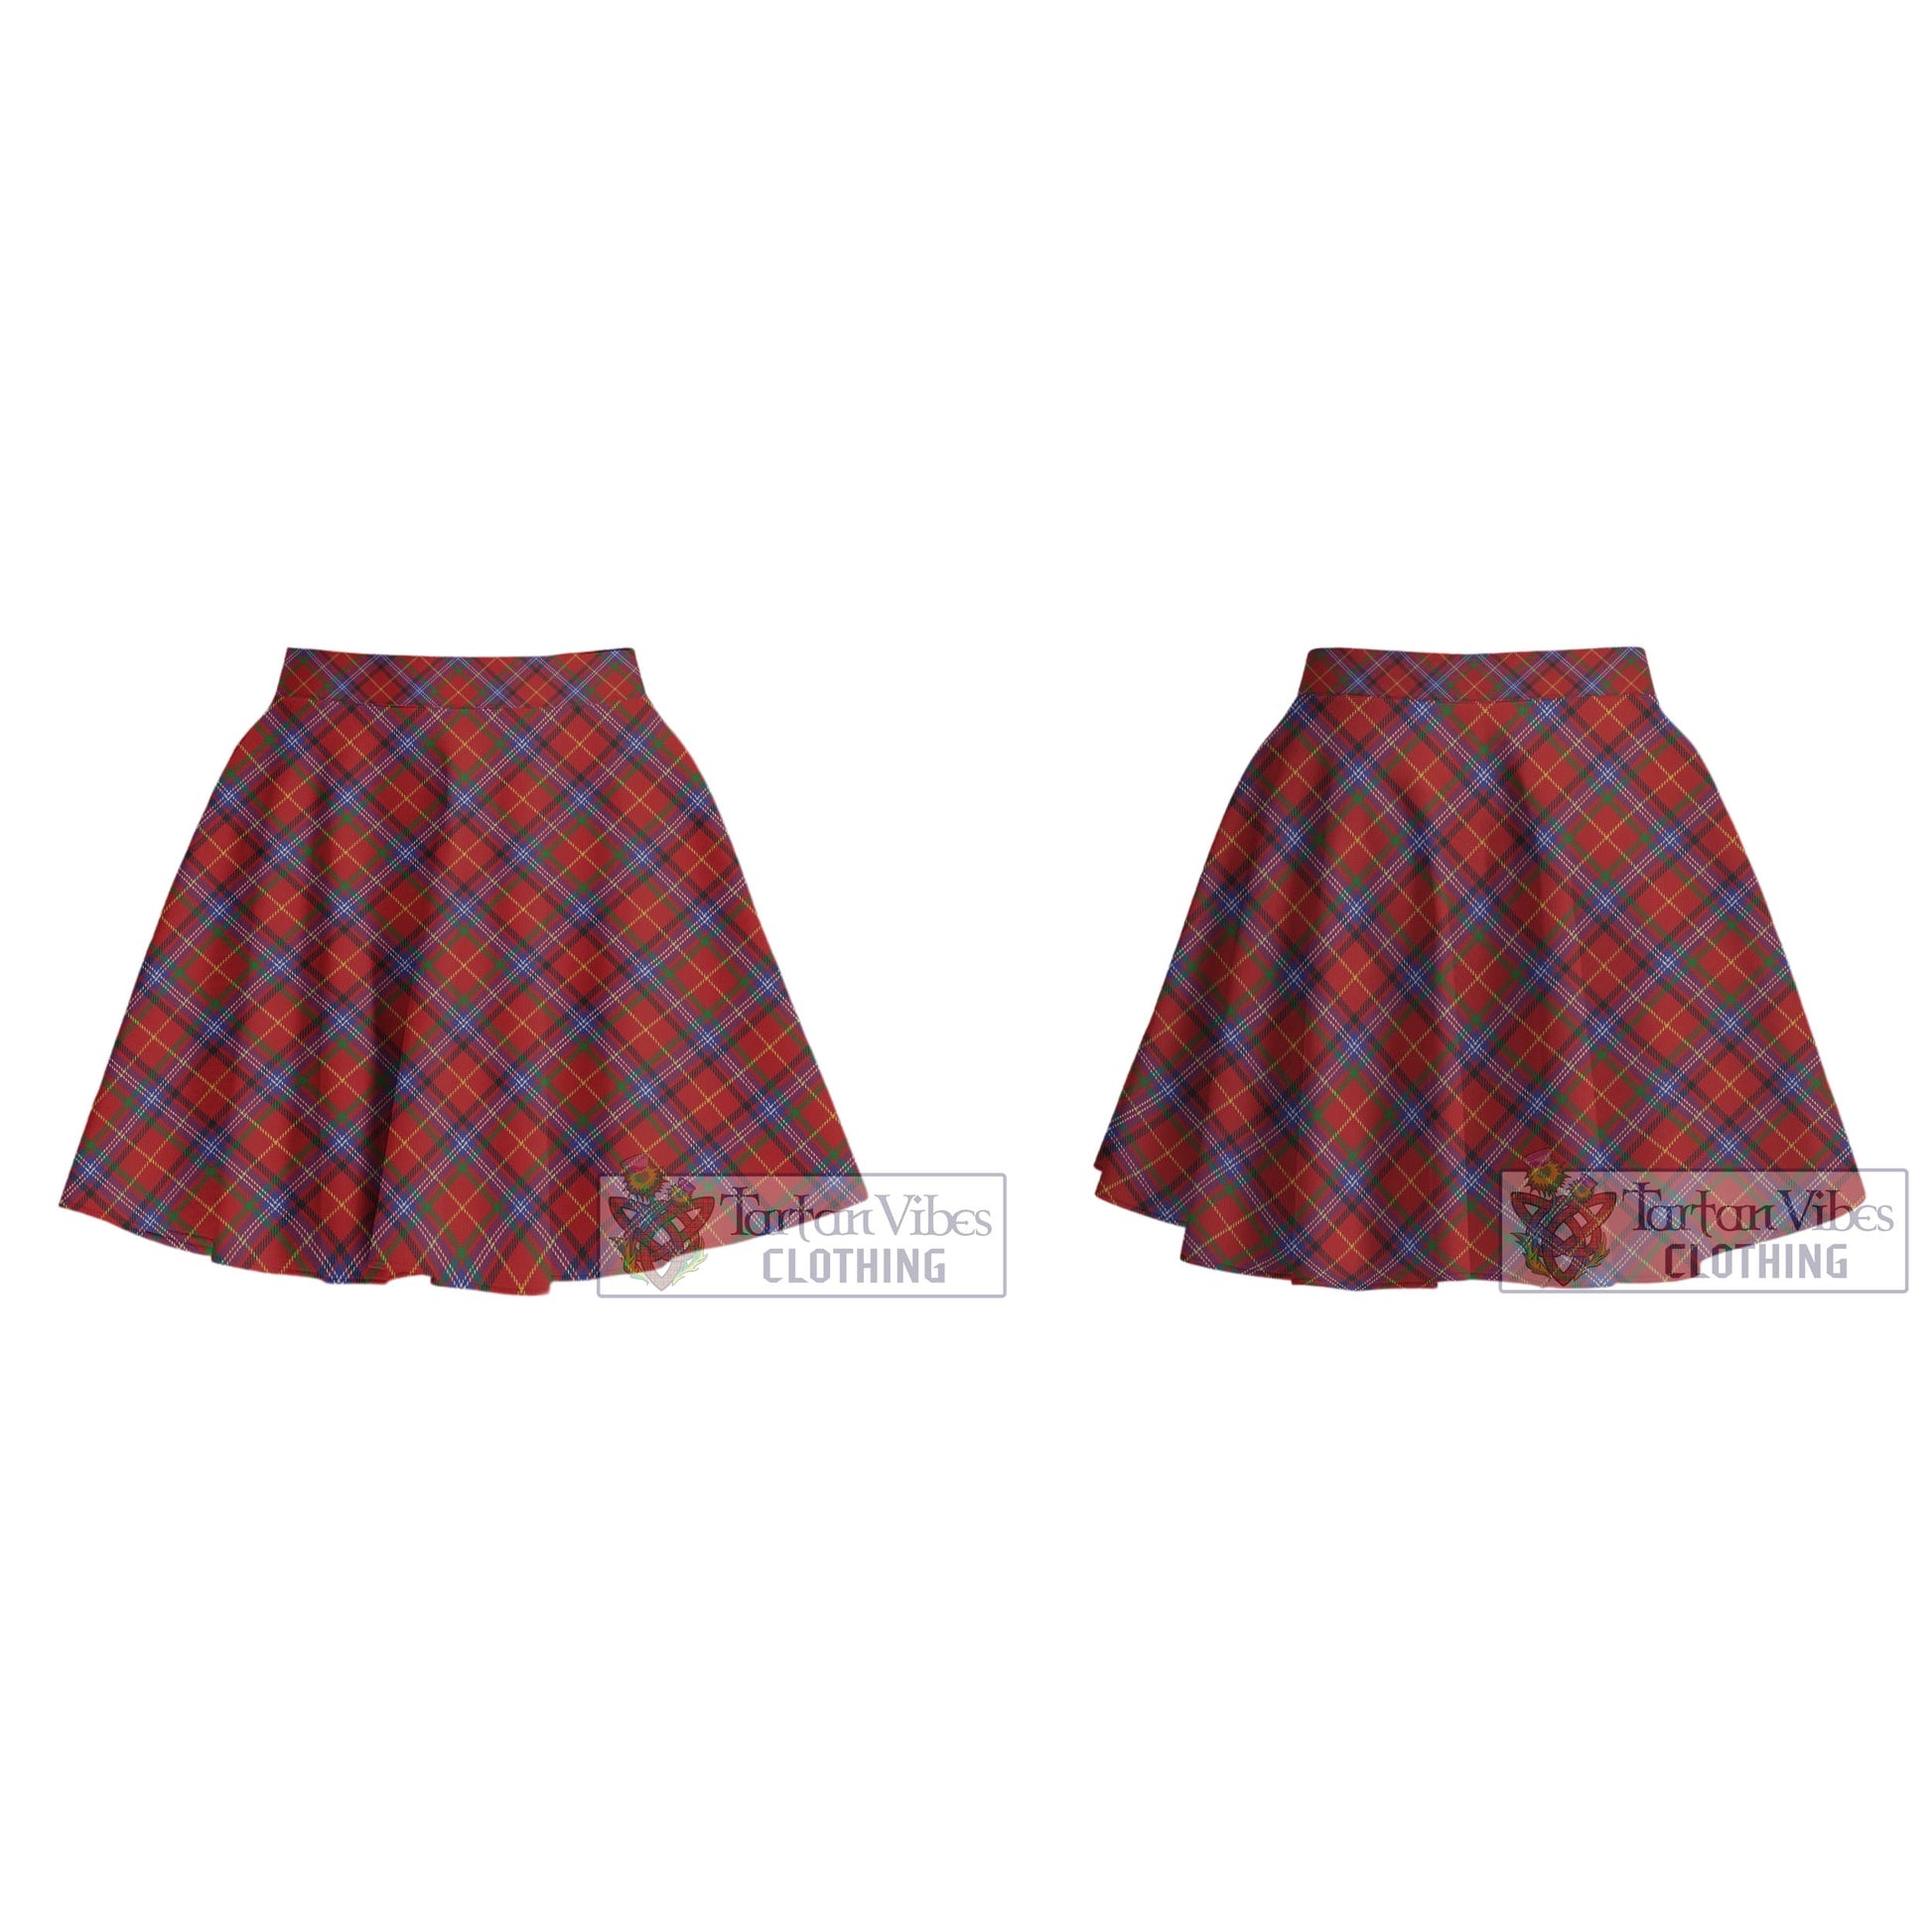 Tartan Vibes Clothing Maynard Tartan Women's Plated Mini Skirt